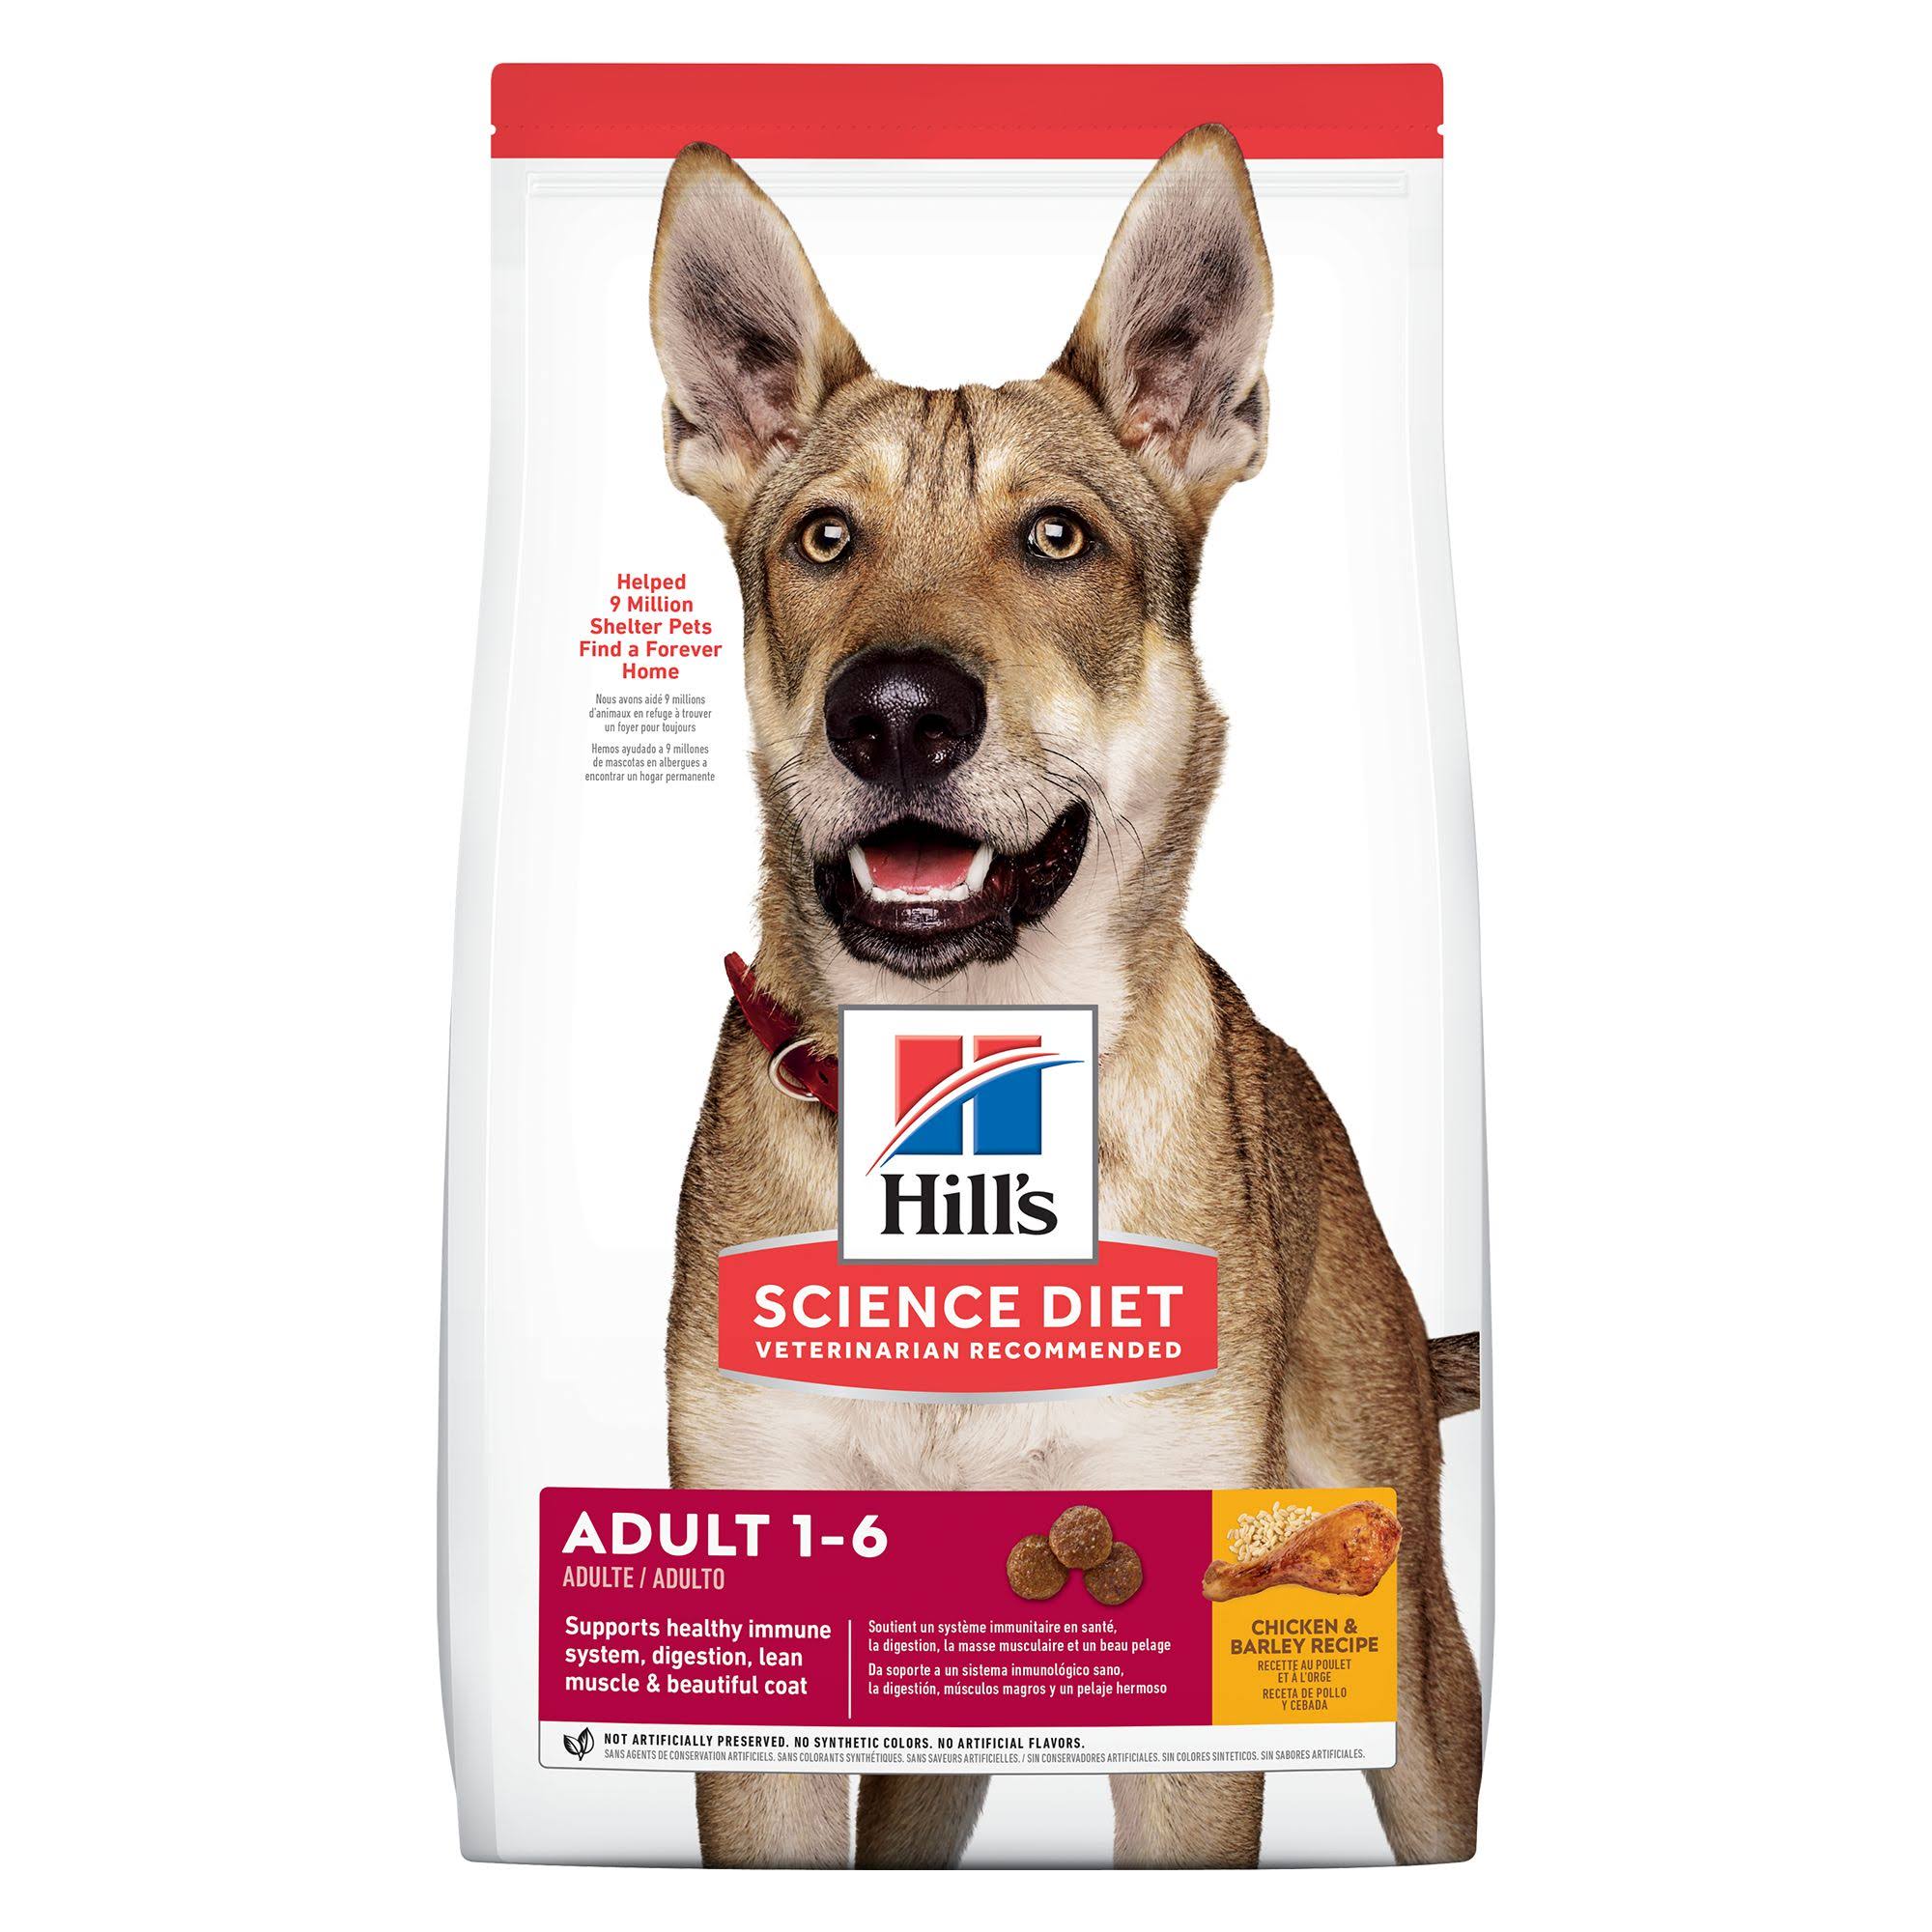 Hills Science Diet Dog Food, Chicken & Barley Recipe, Adult 1-6 - 15 lb